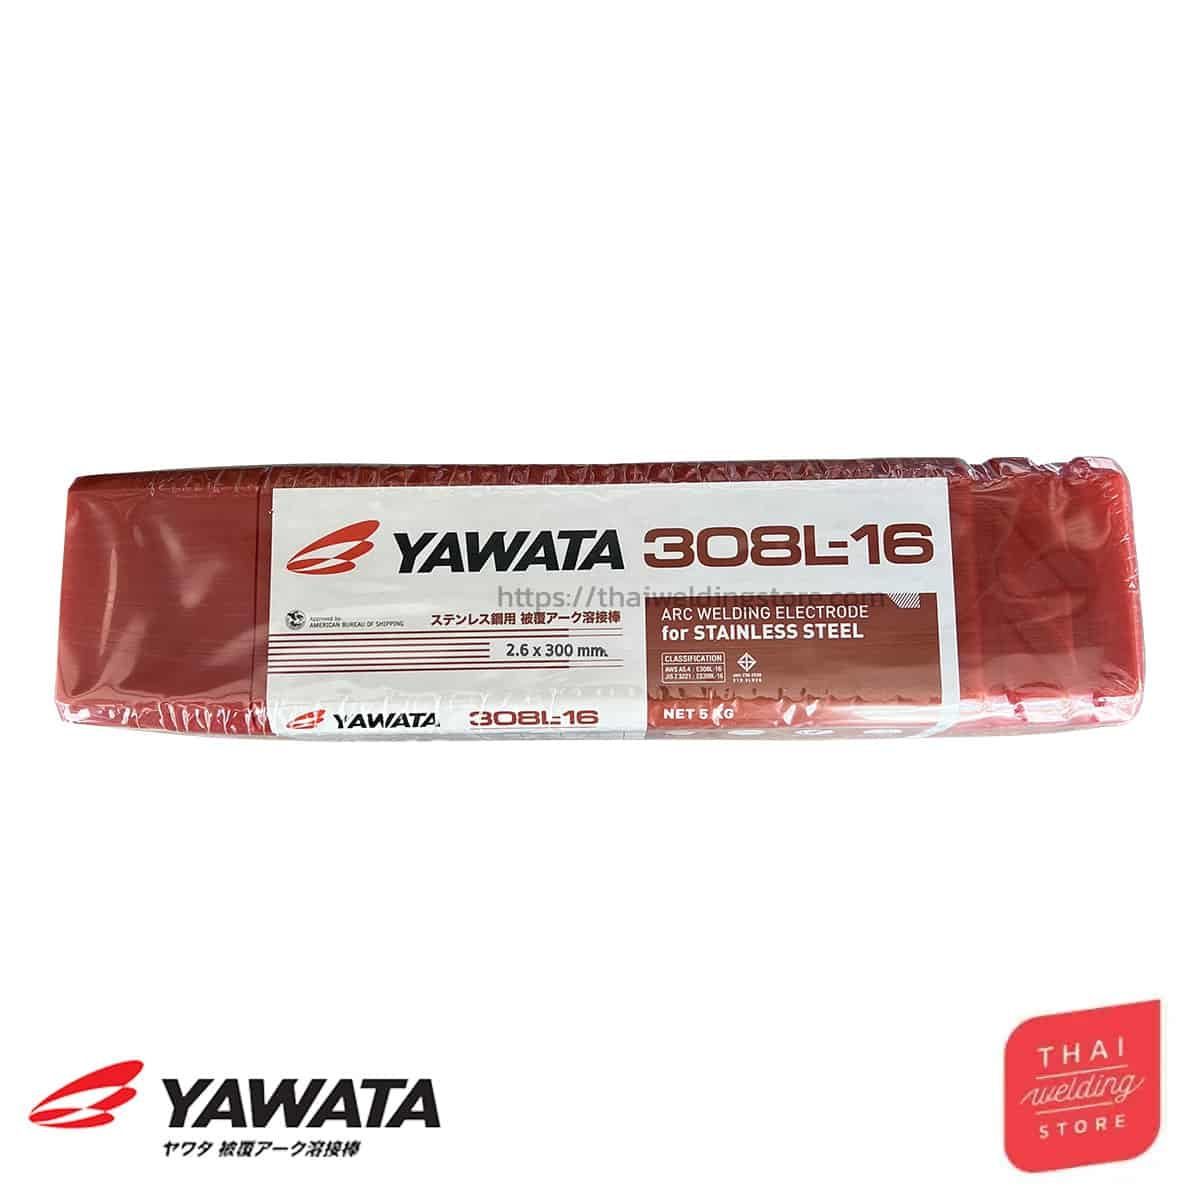 Yawata 308L